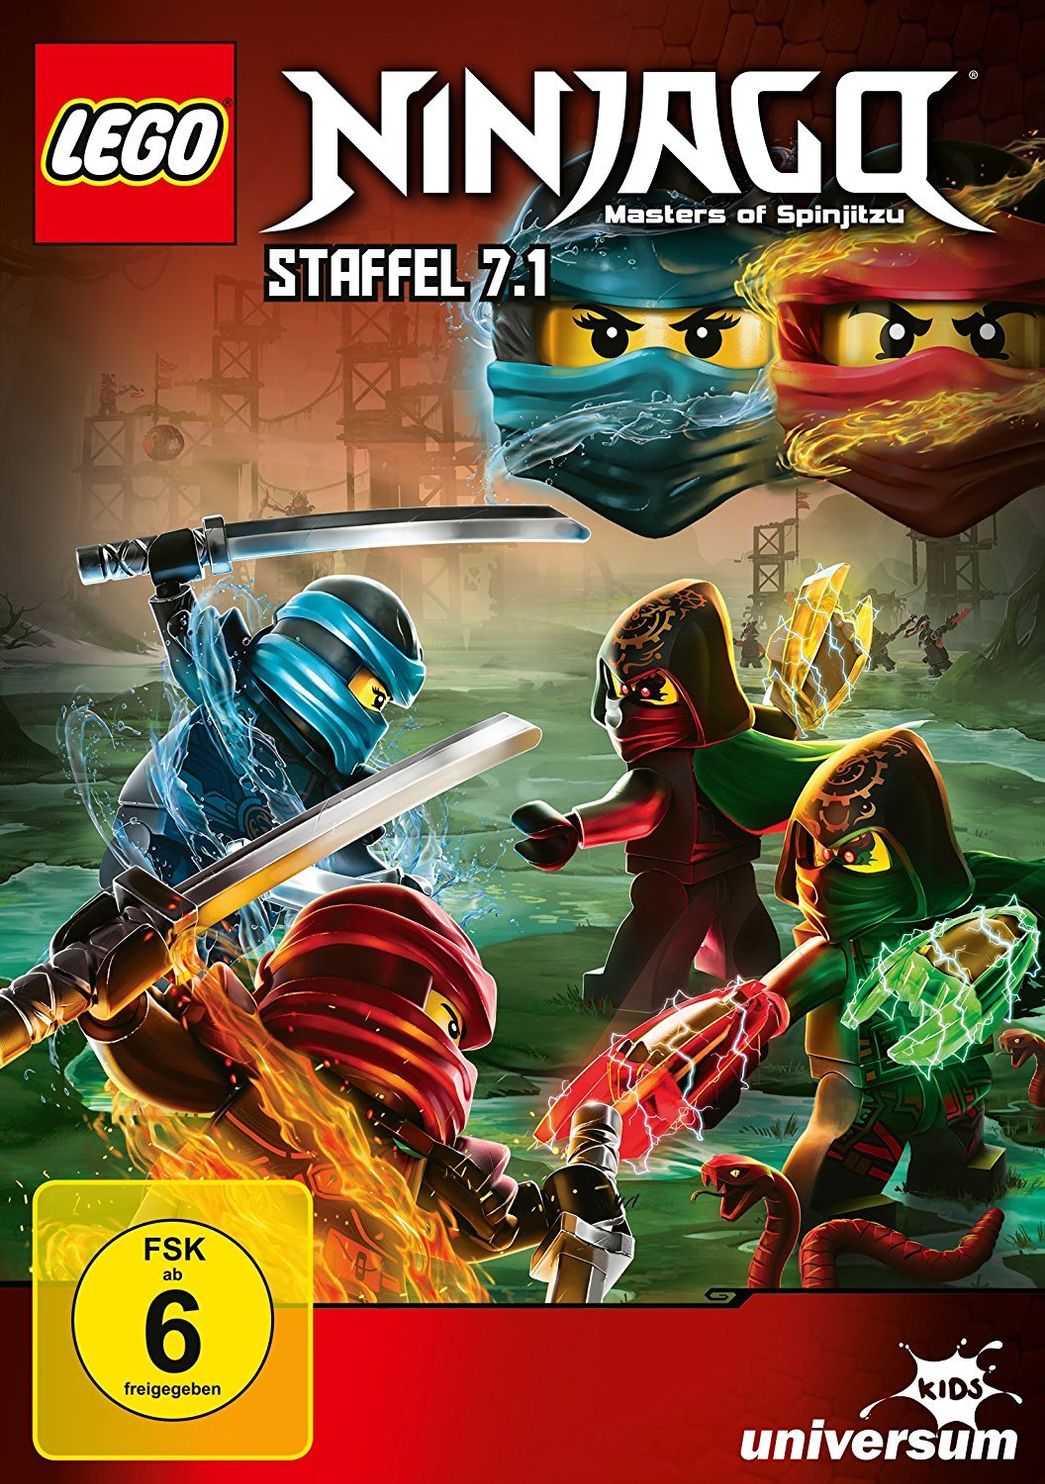 Lego Ninjago - Staffel 7.1 kaufen | tausendkind.at